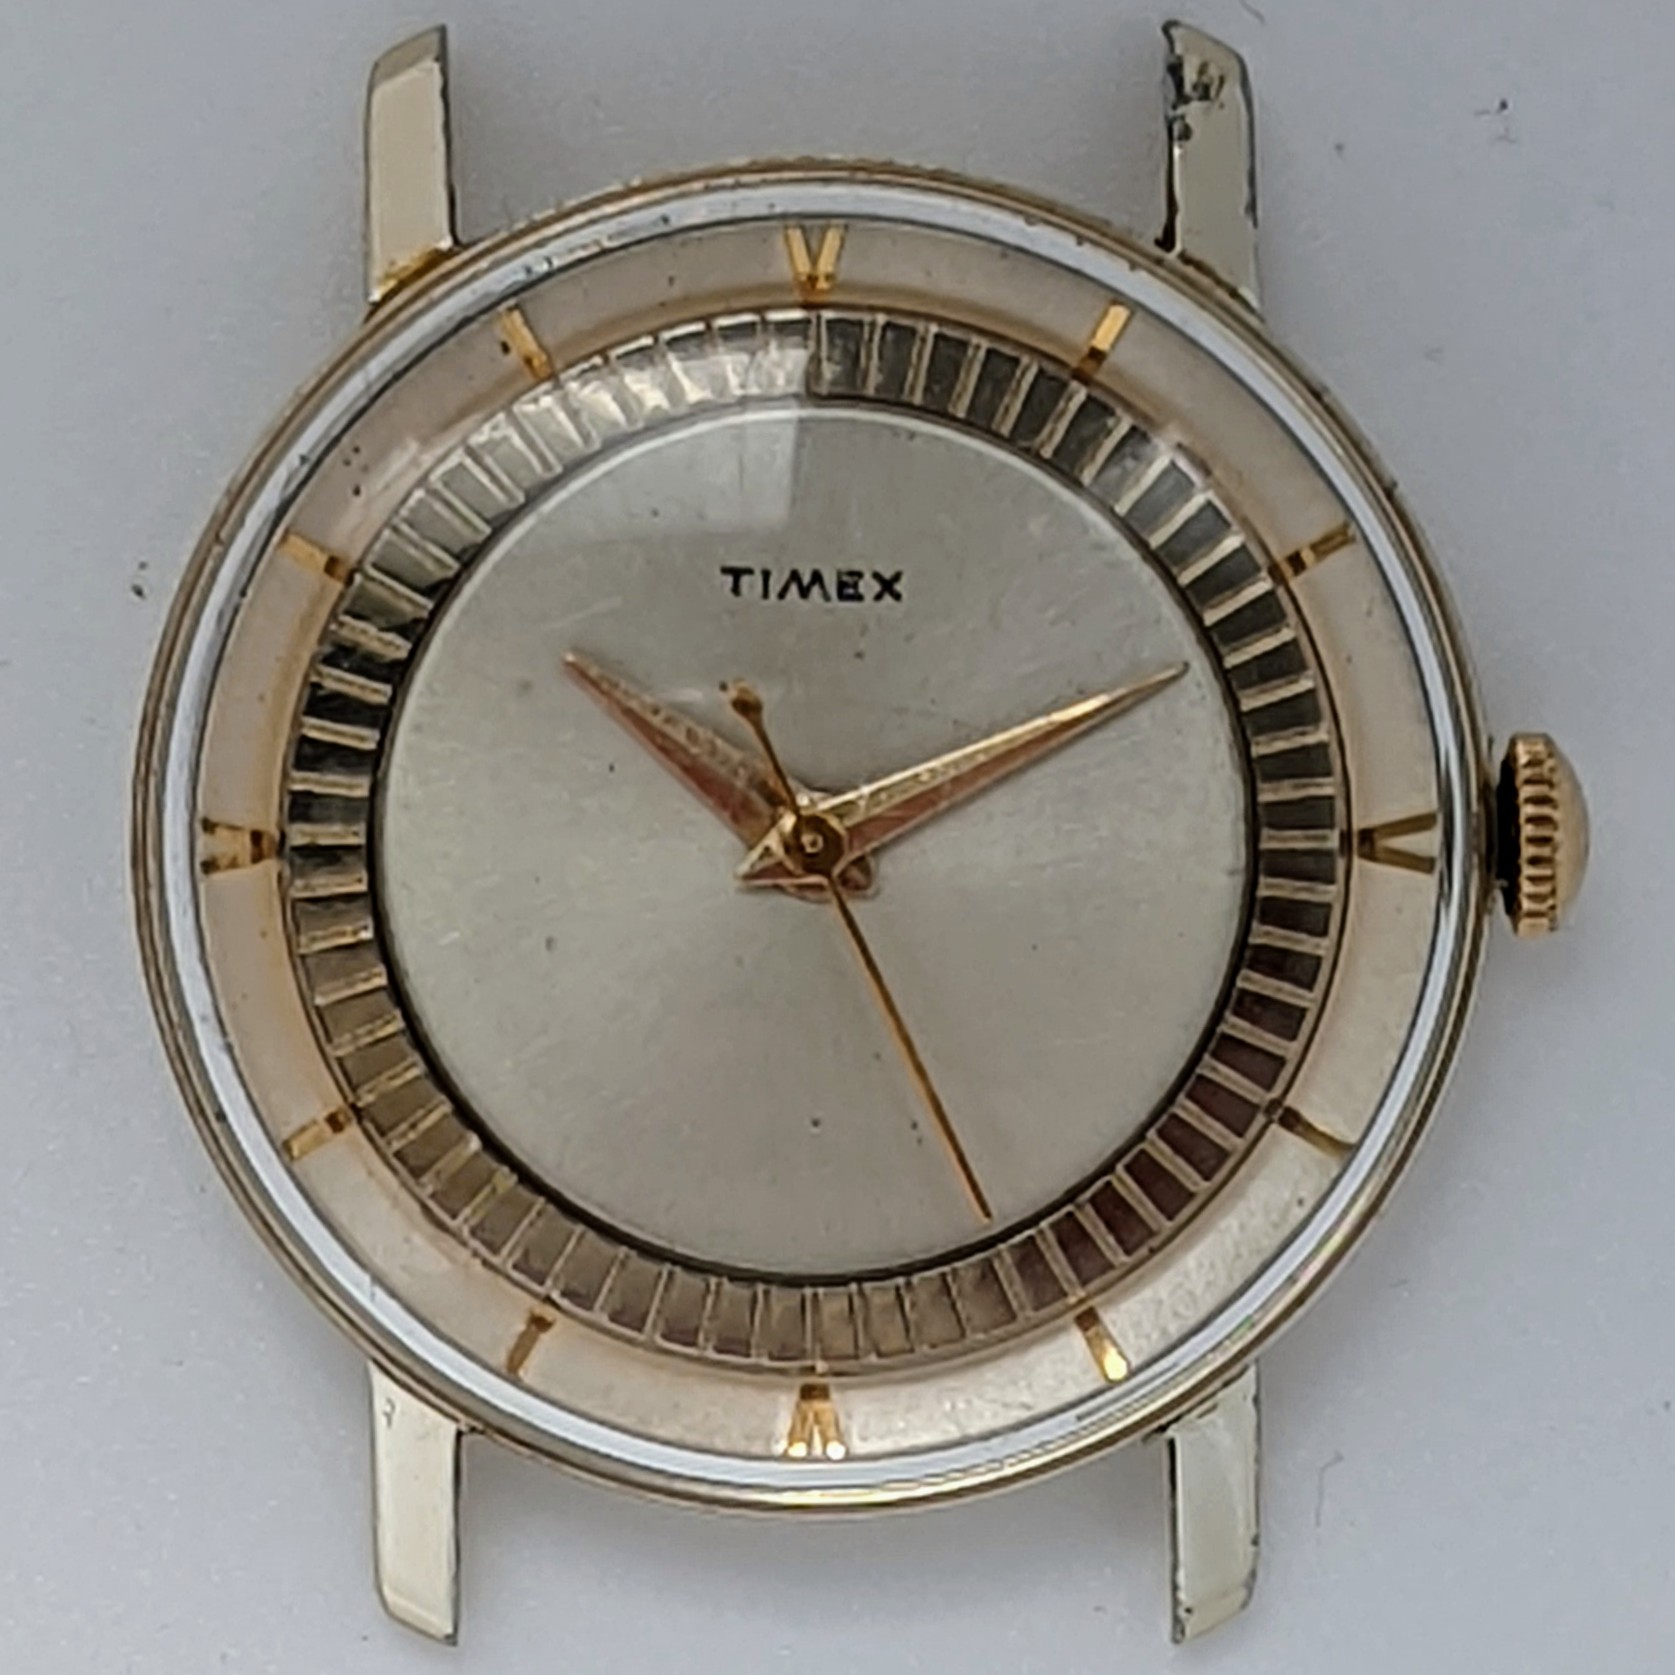 Timex Darwin 1214 2260 [1960]